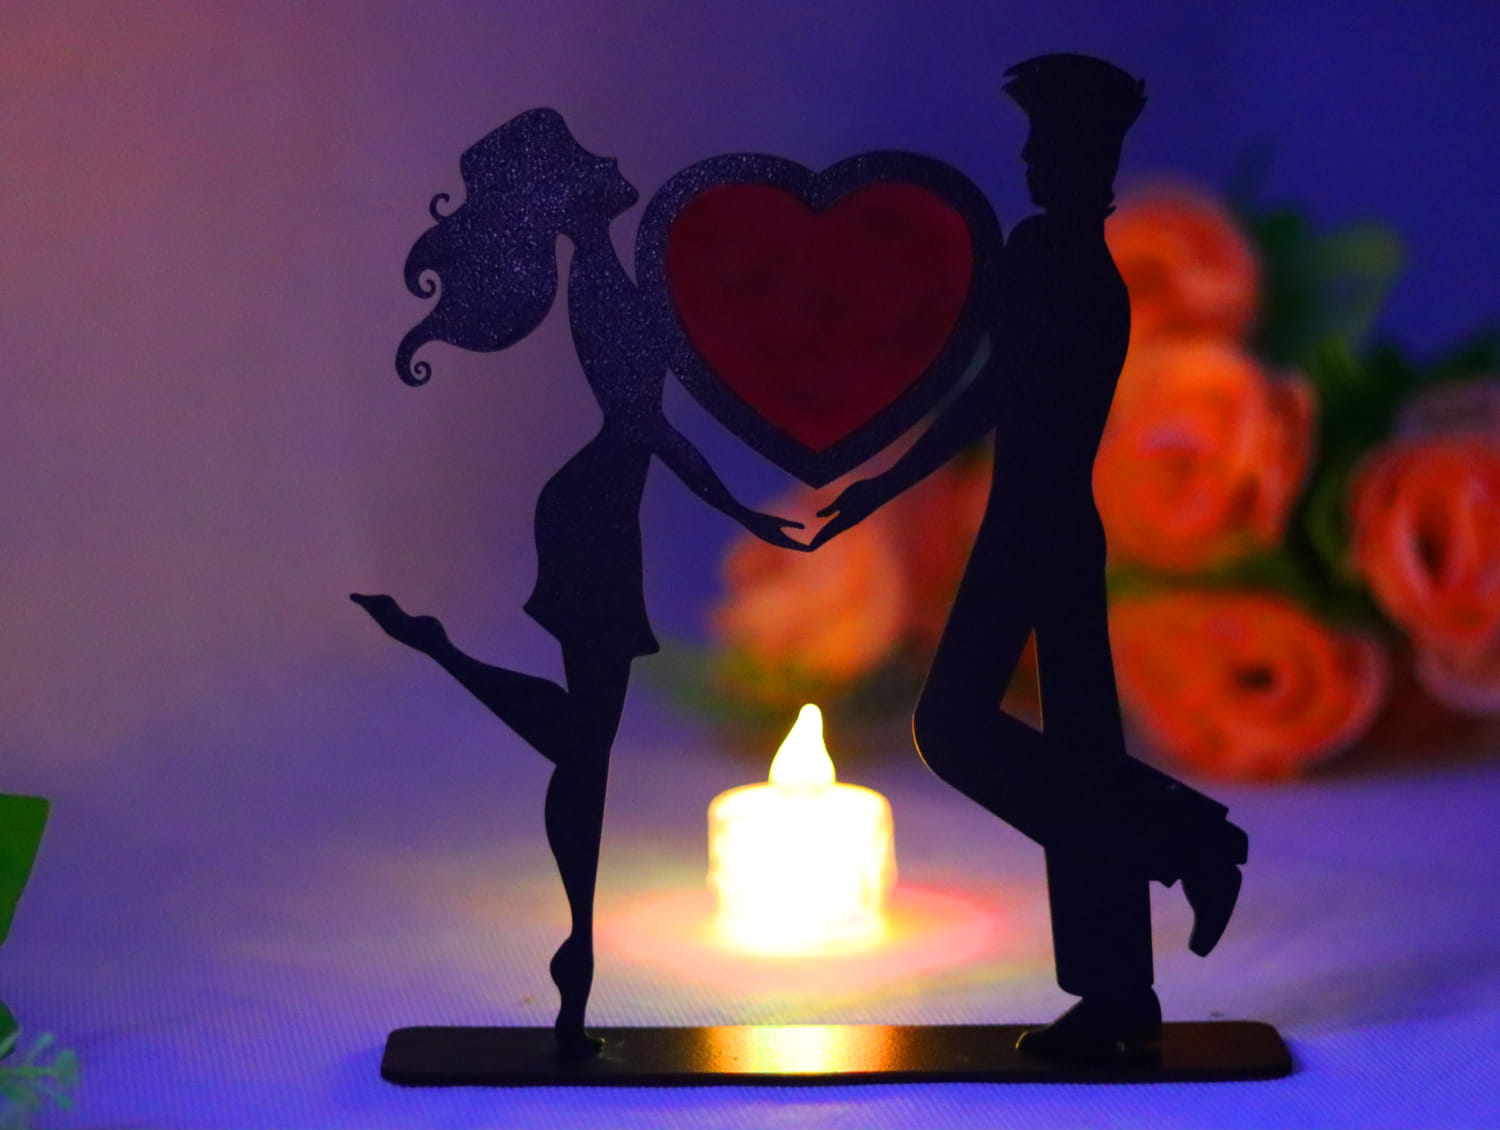 Laser Cut Romantic Love Couple Standing Valentine Day Decor Free Vector